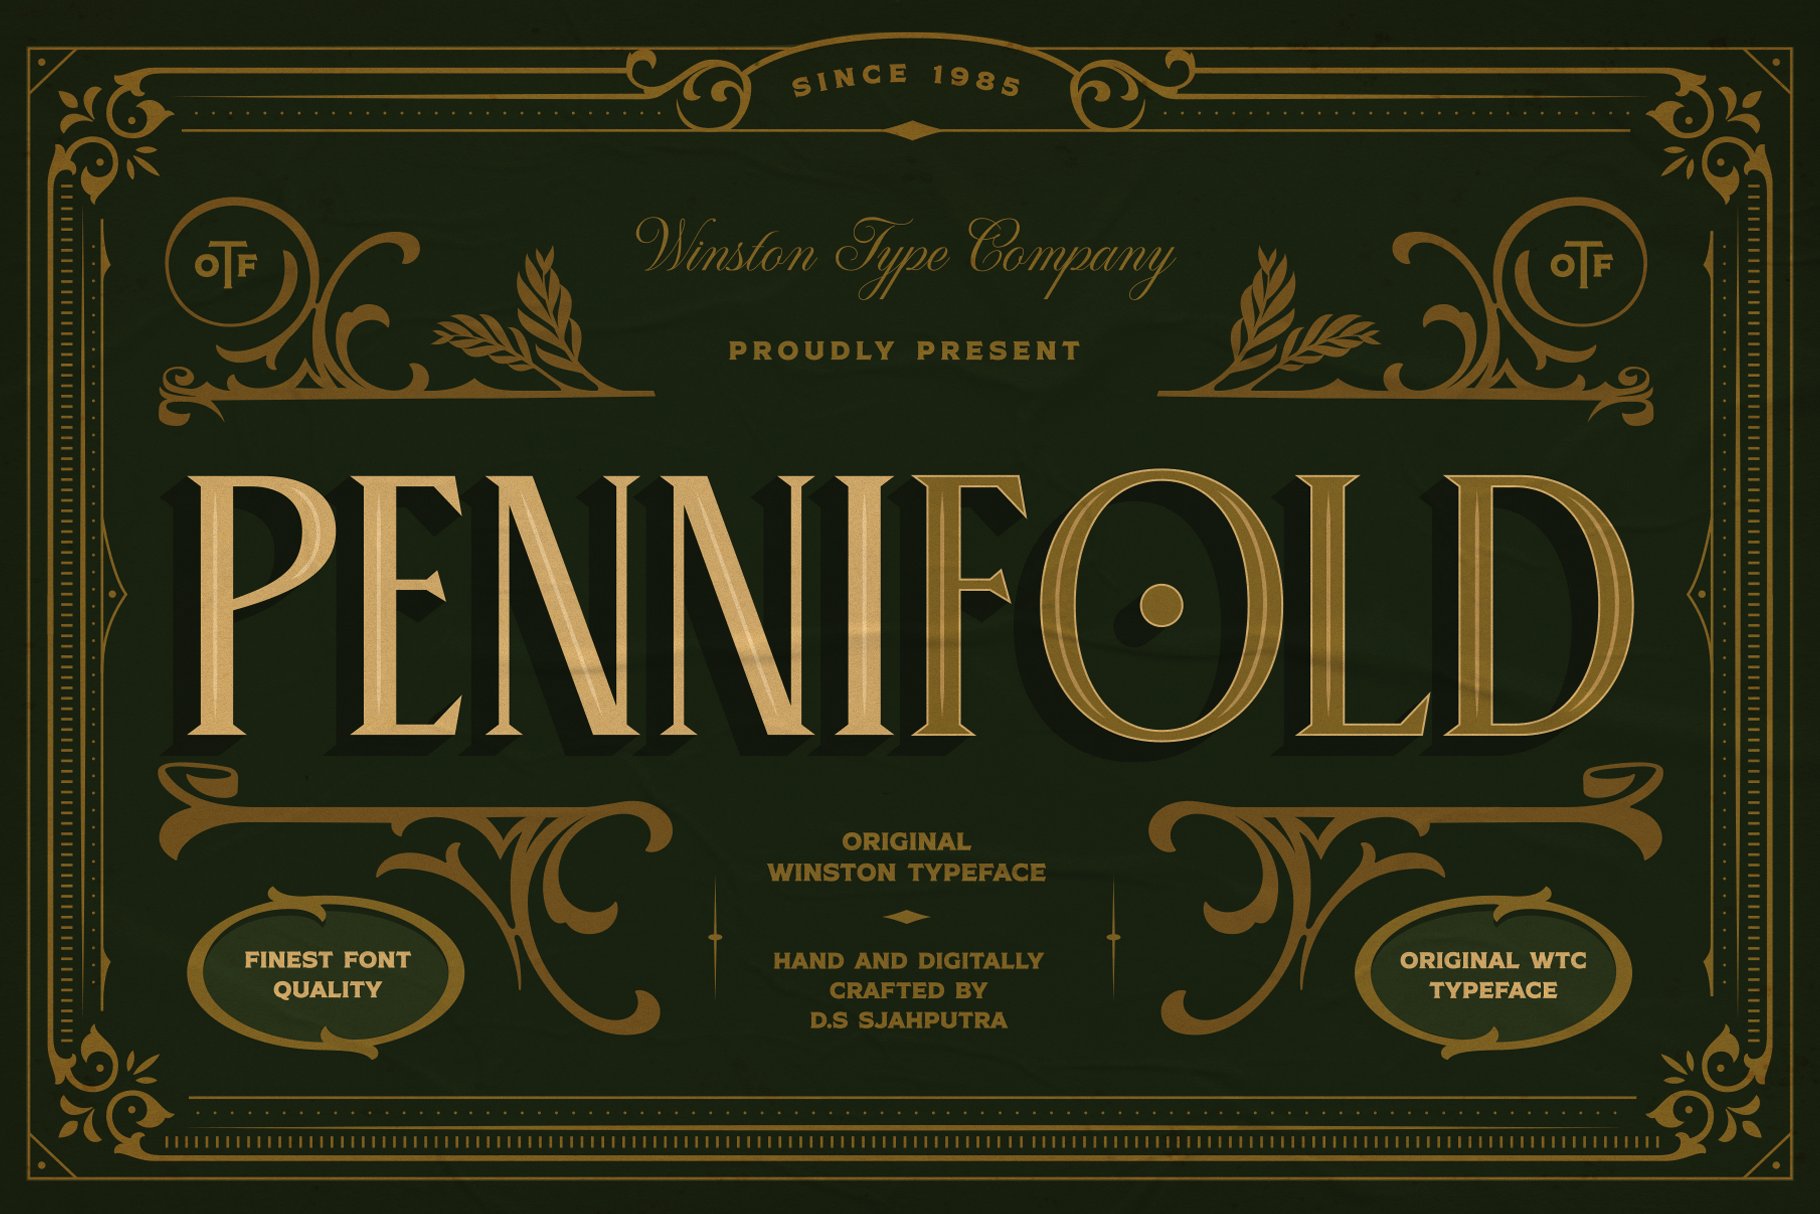 WT Pennifold cover image.